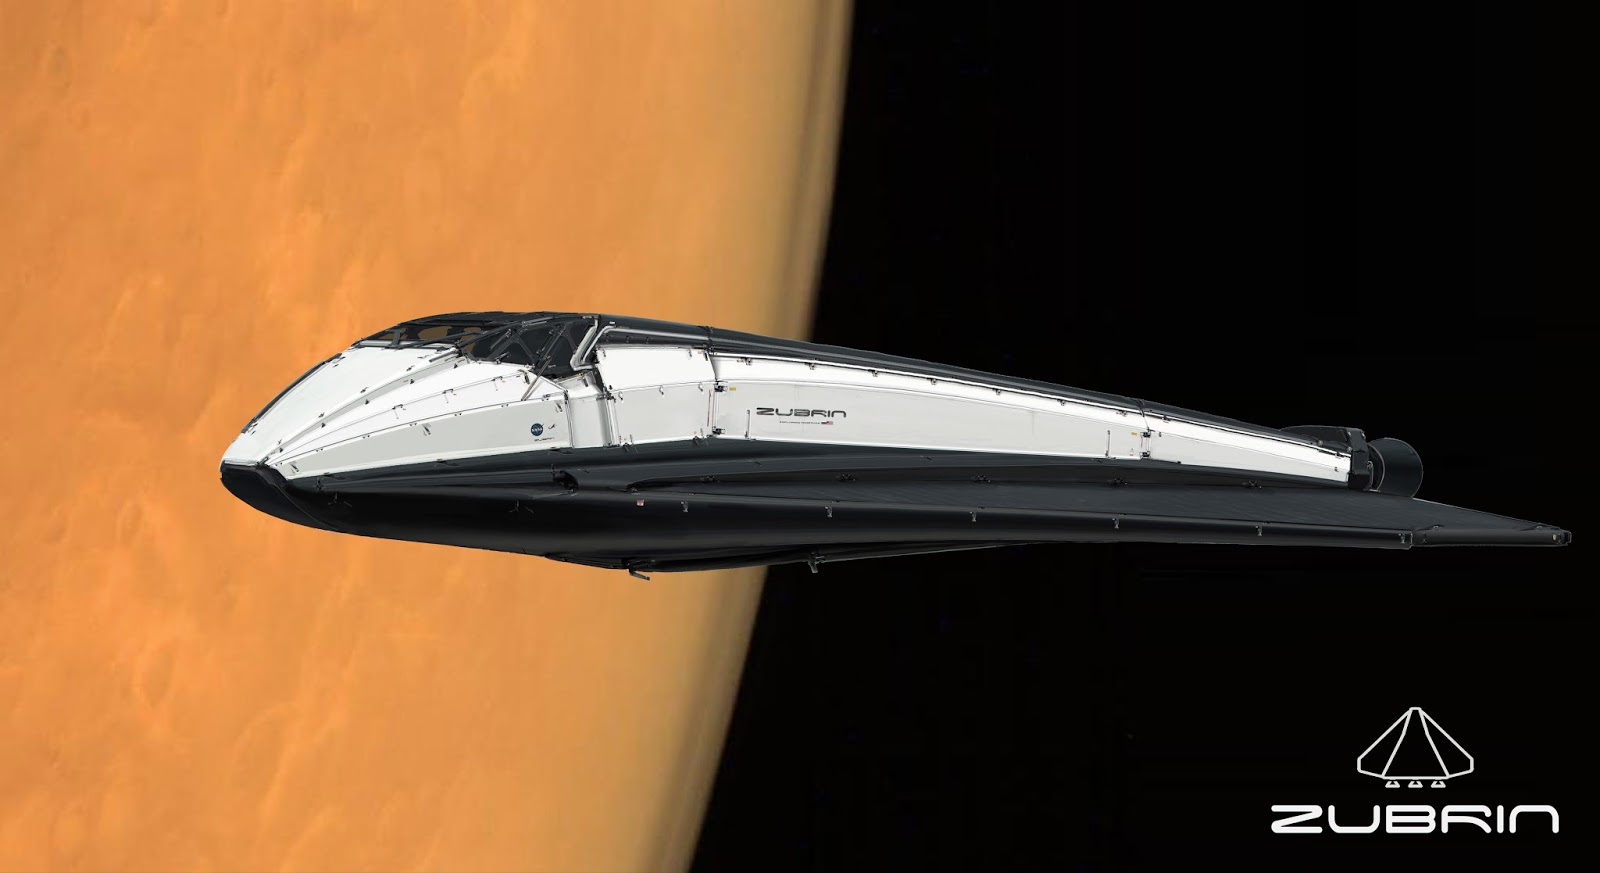 Mars shuttle concept by Nenad Gojkovic